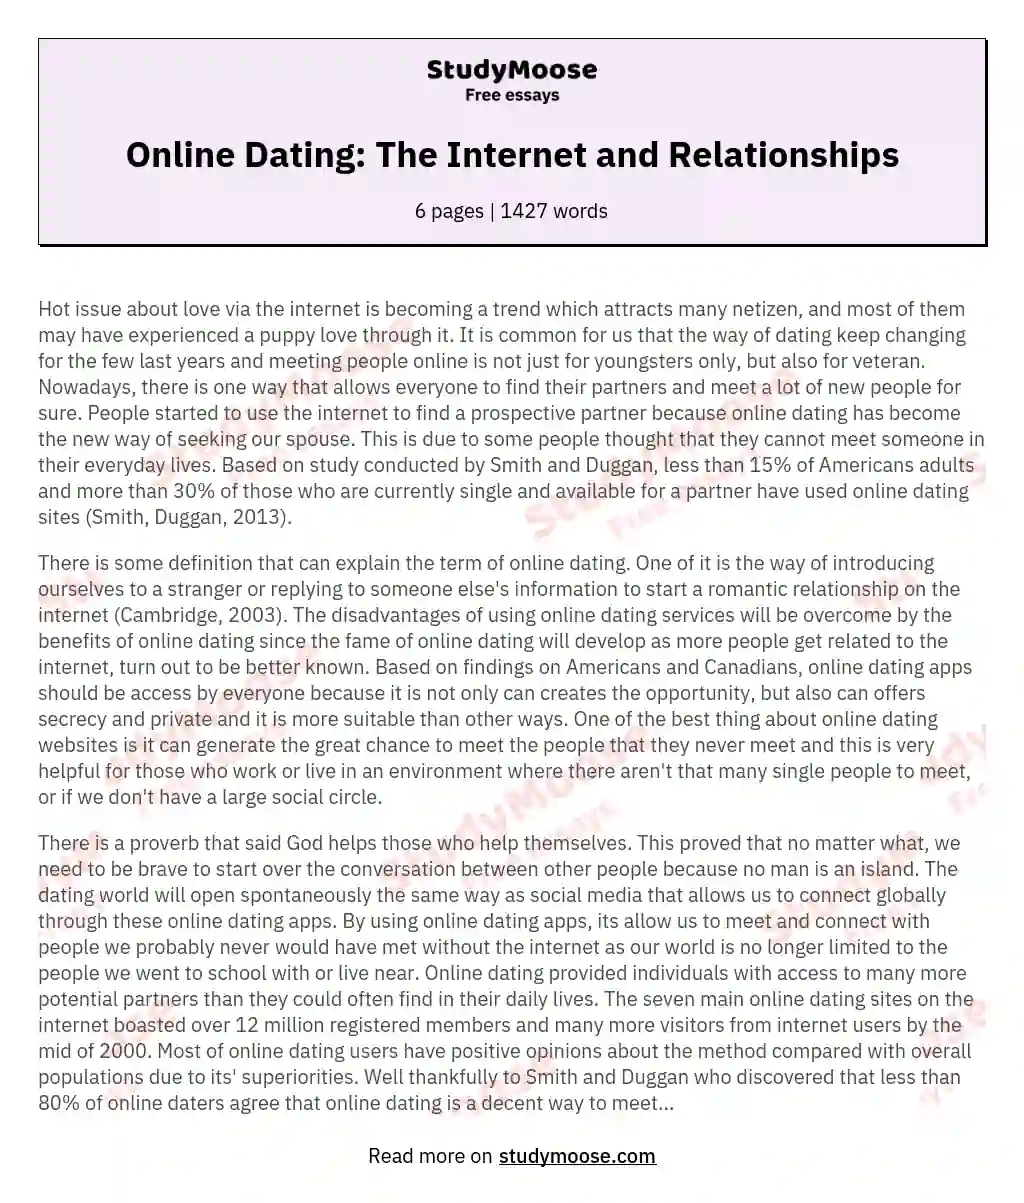 Online dating sites essay